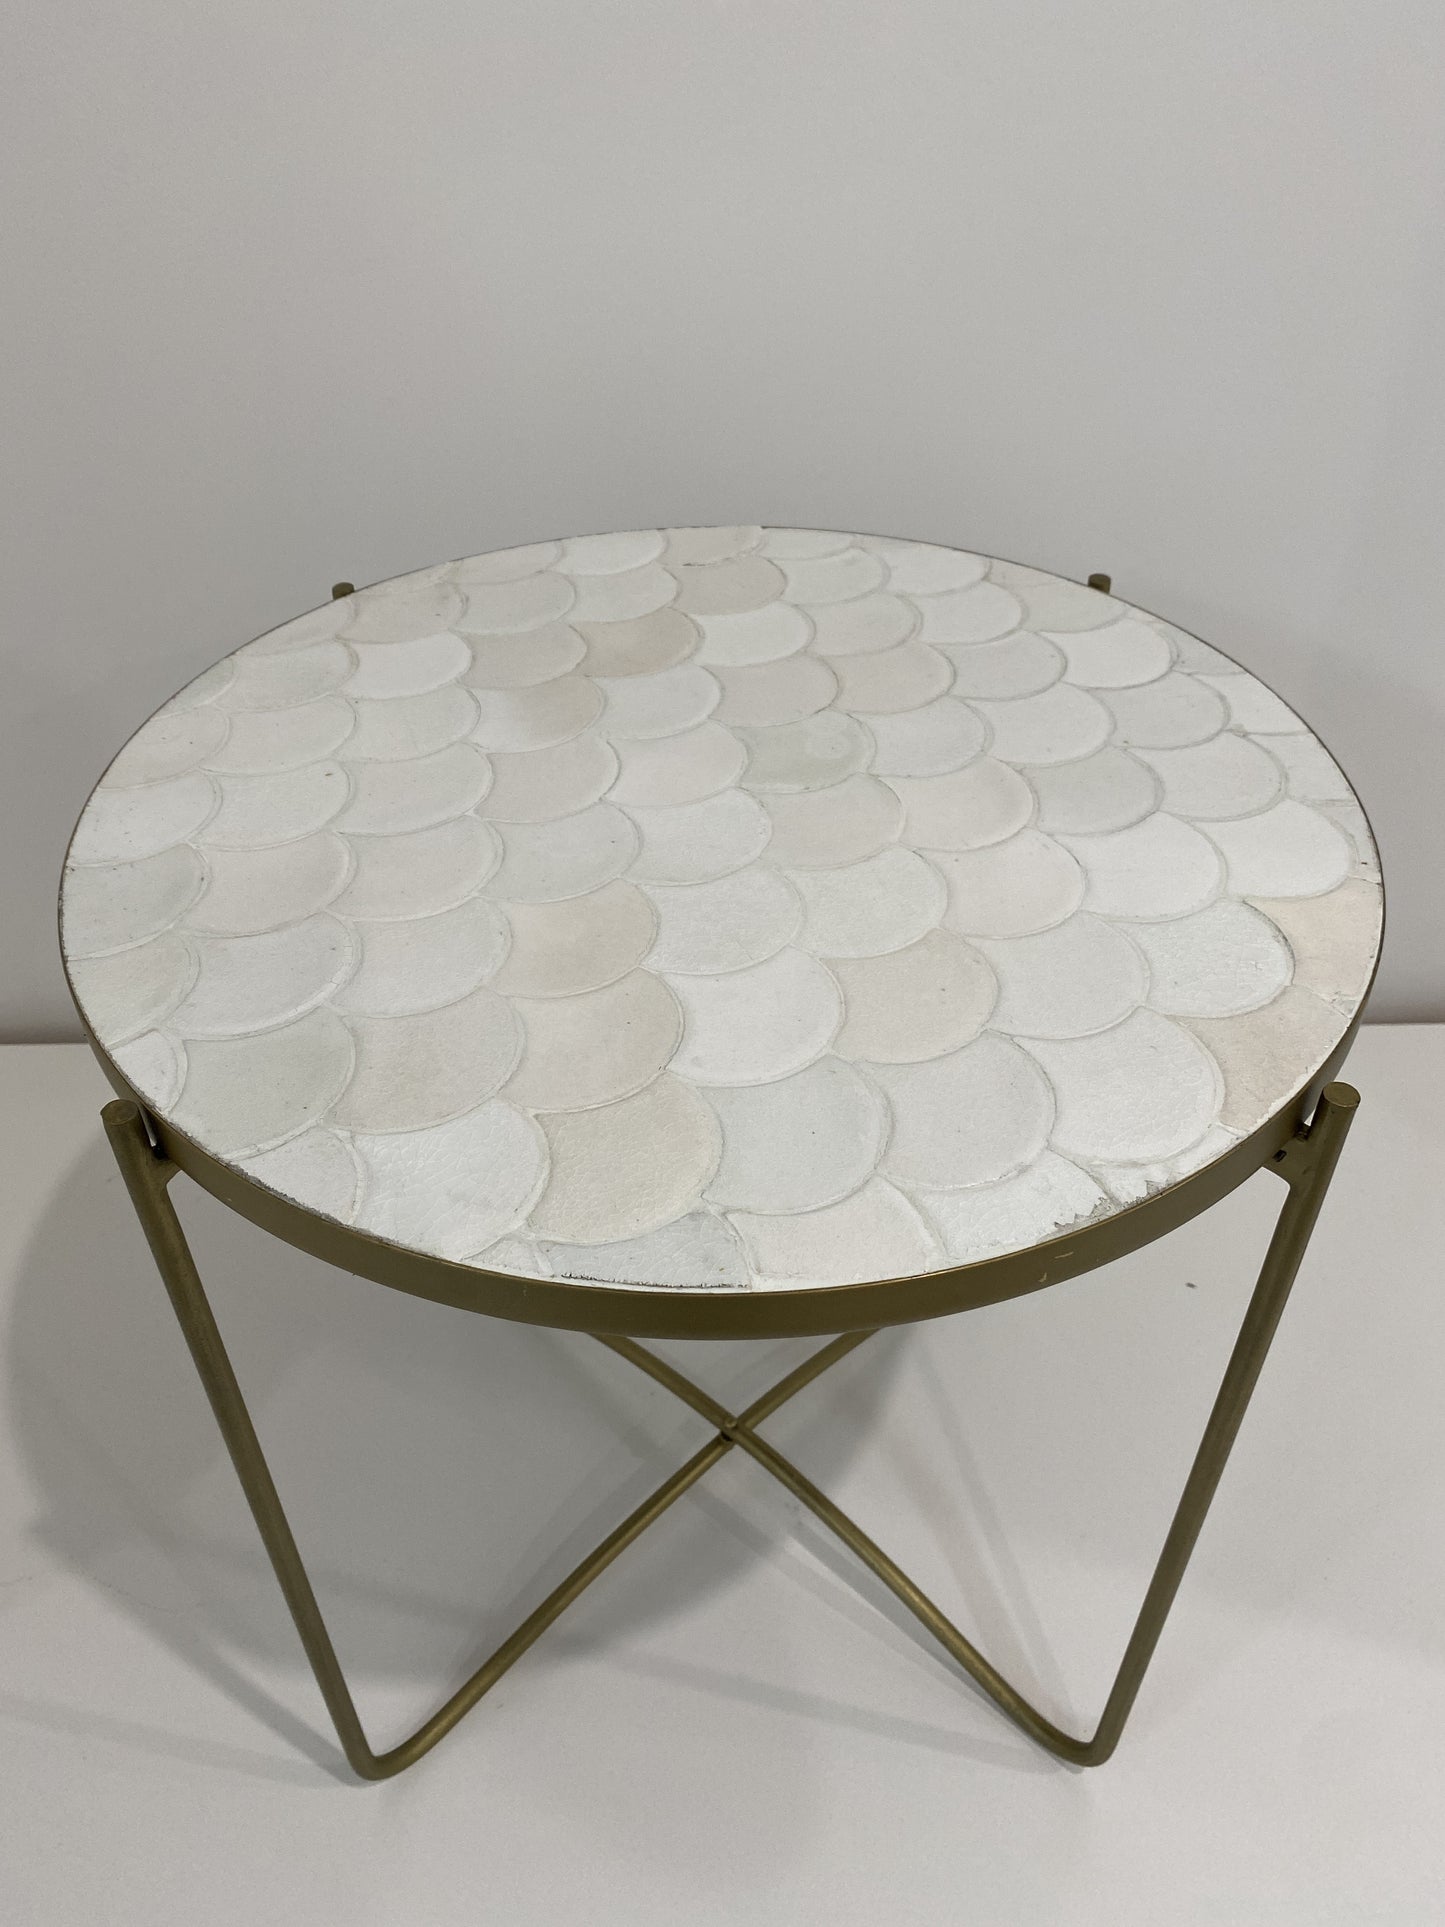 Clifton White tile table